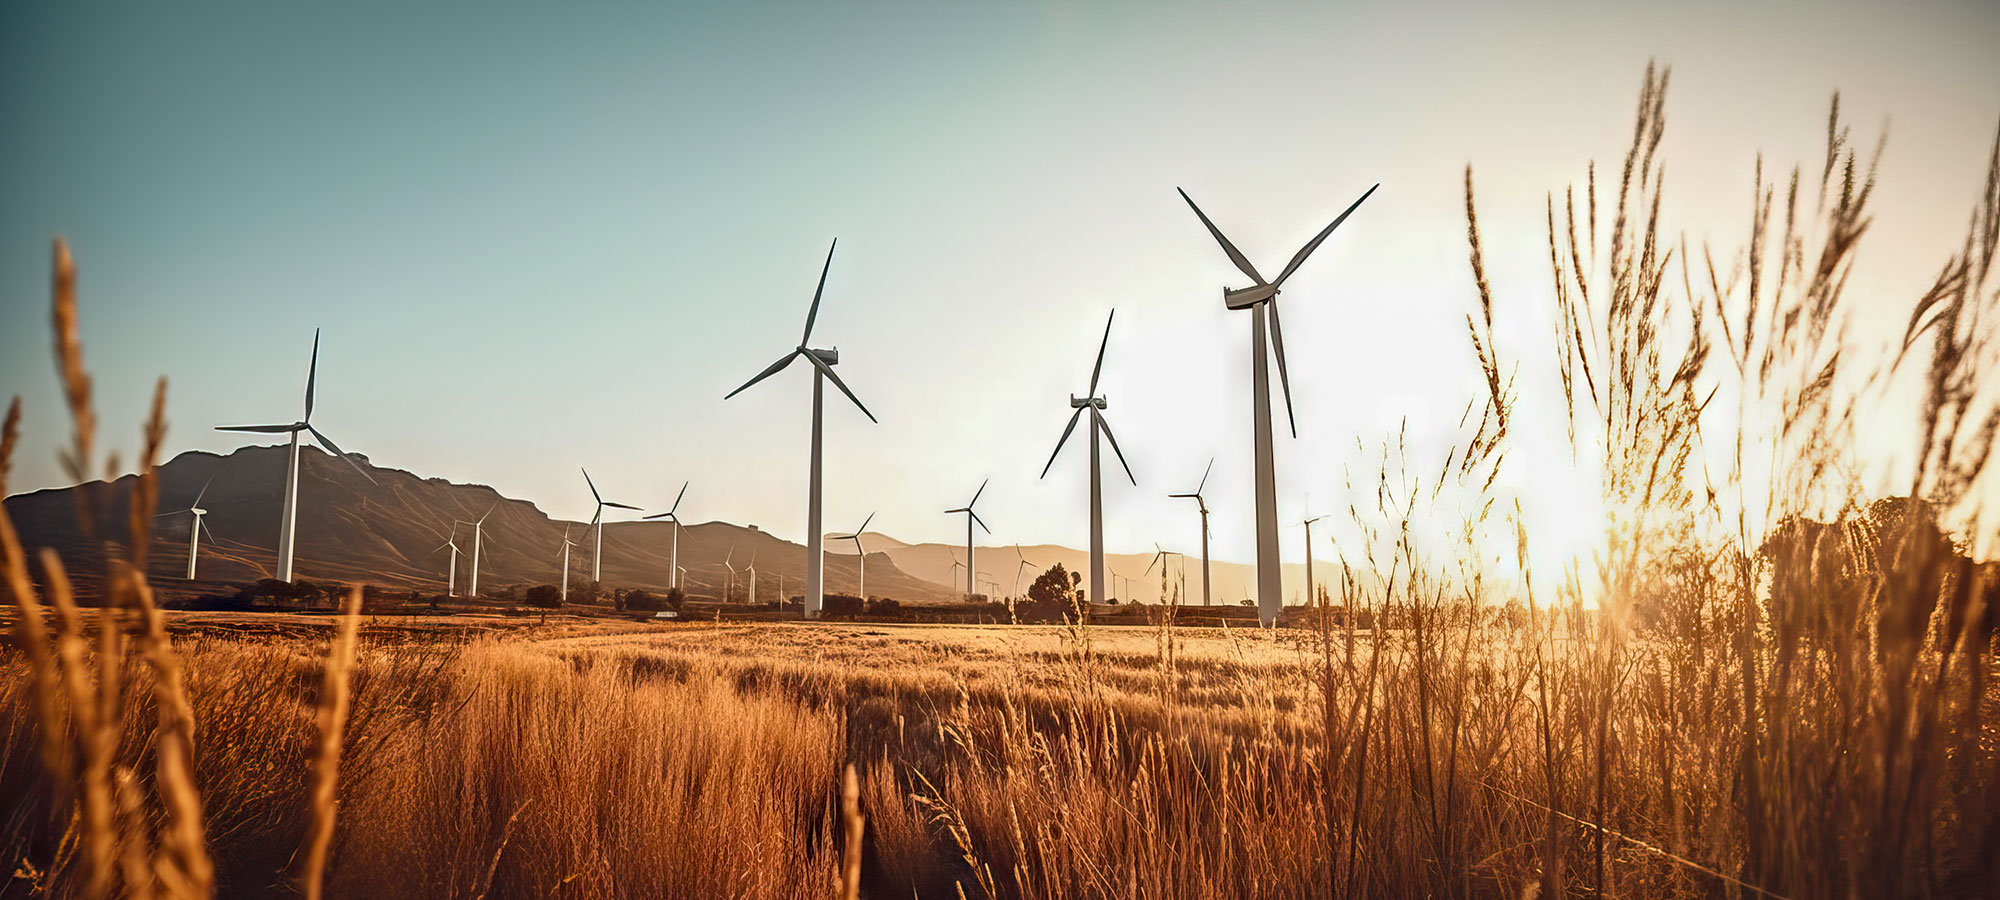 Career Change to wind energy industry